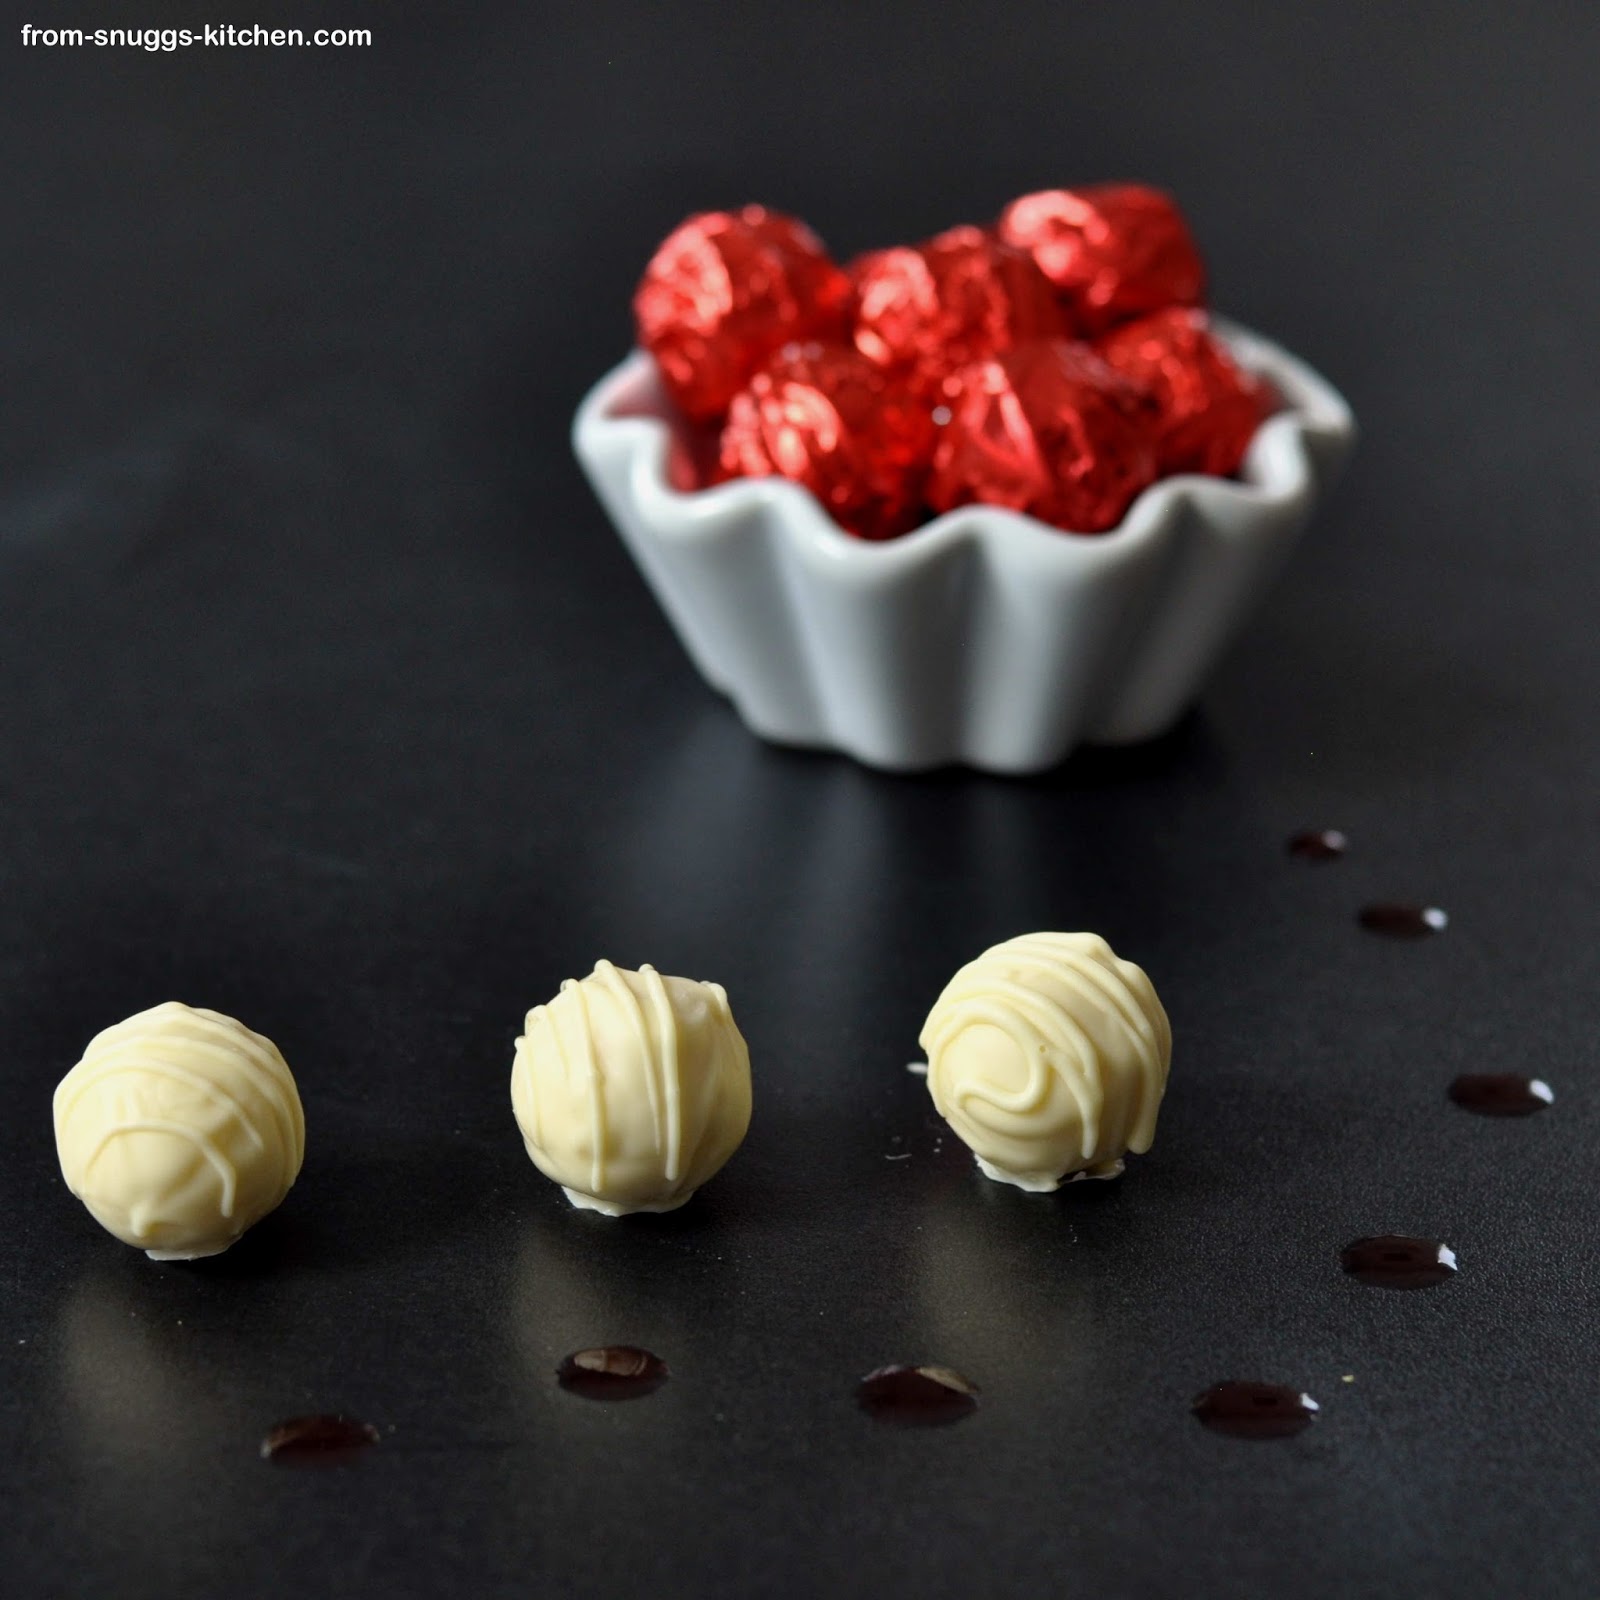 Zarte Versuchung - Erdbeer-Vanille-Pralinen - From-Snuggs-Kitchen